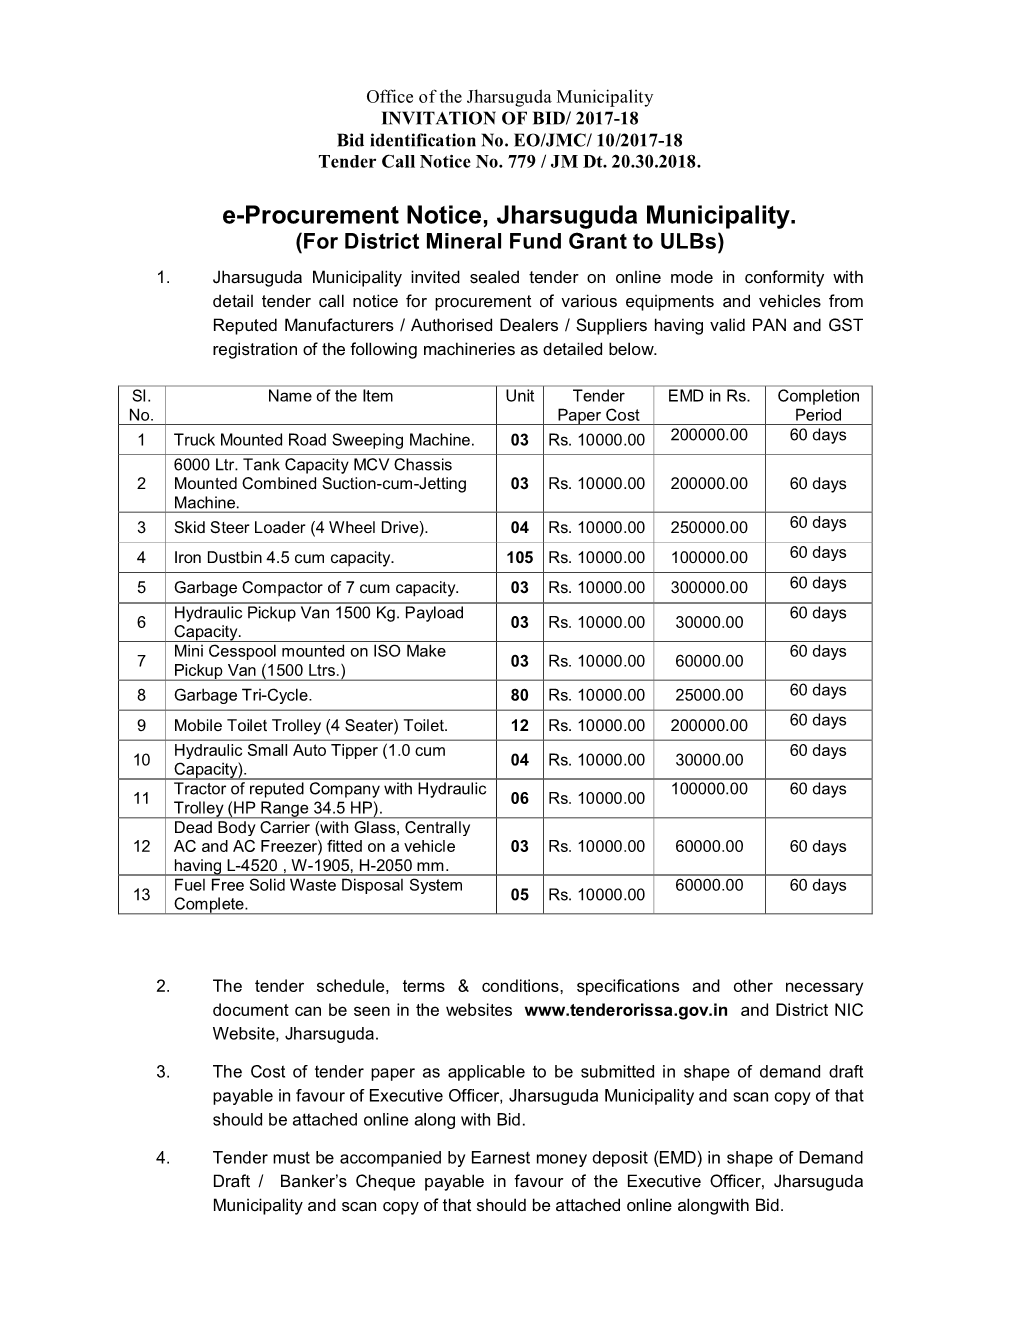 E-Procurement Notice, Jharsuguda Municipality. (For District Mineral Fund Grant to Ulbs) 1